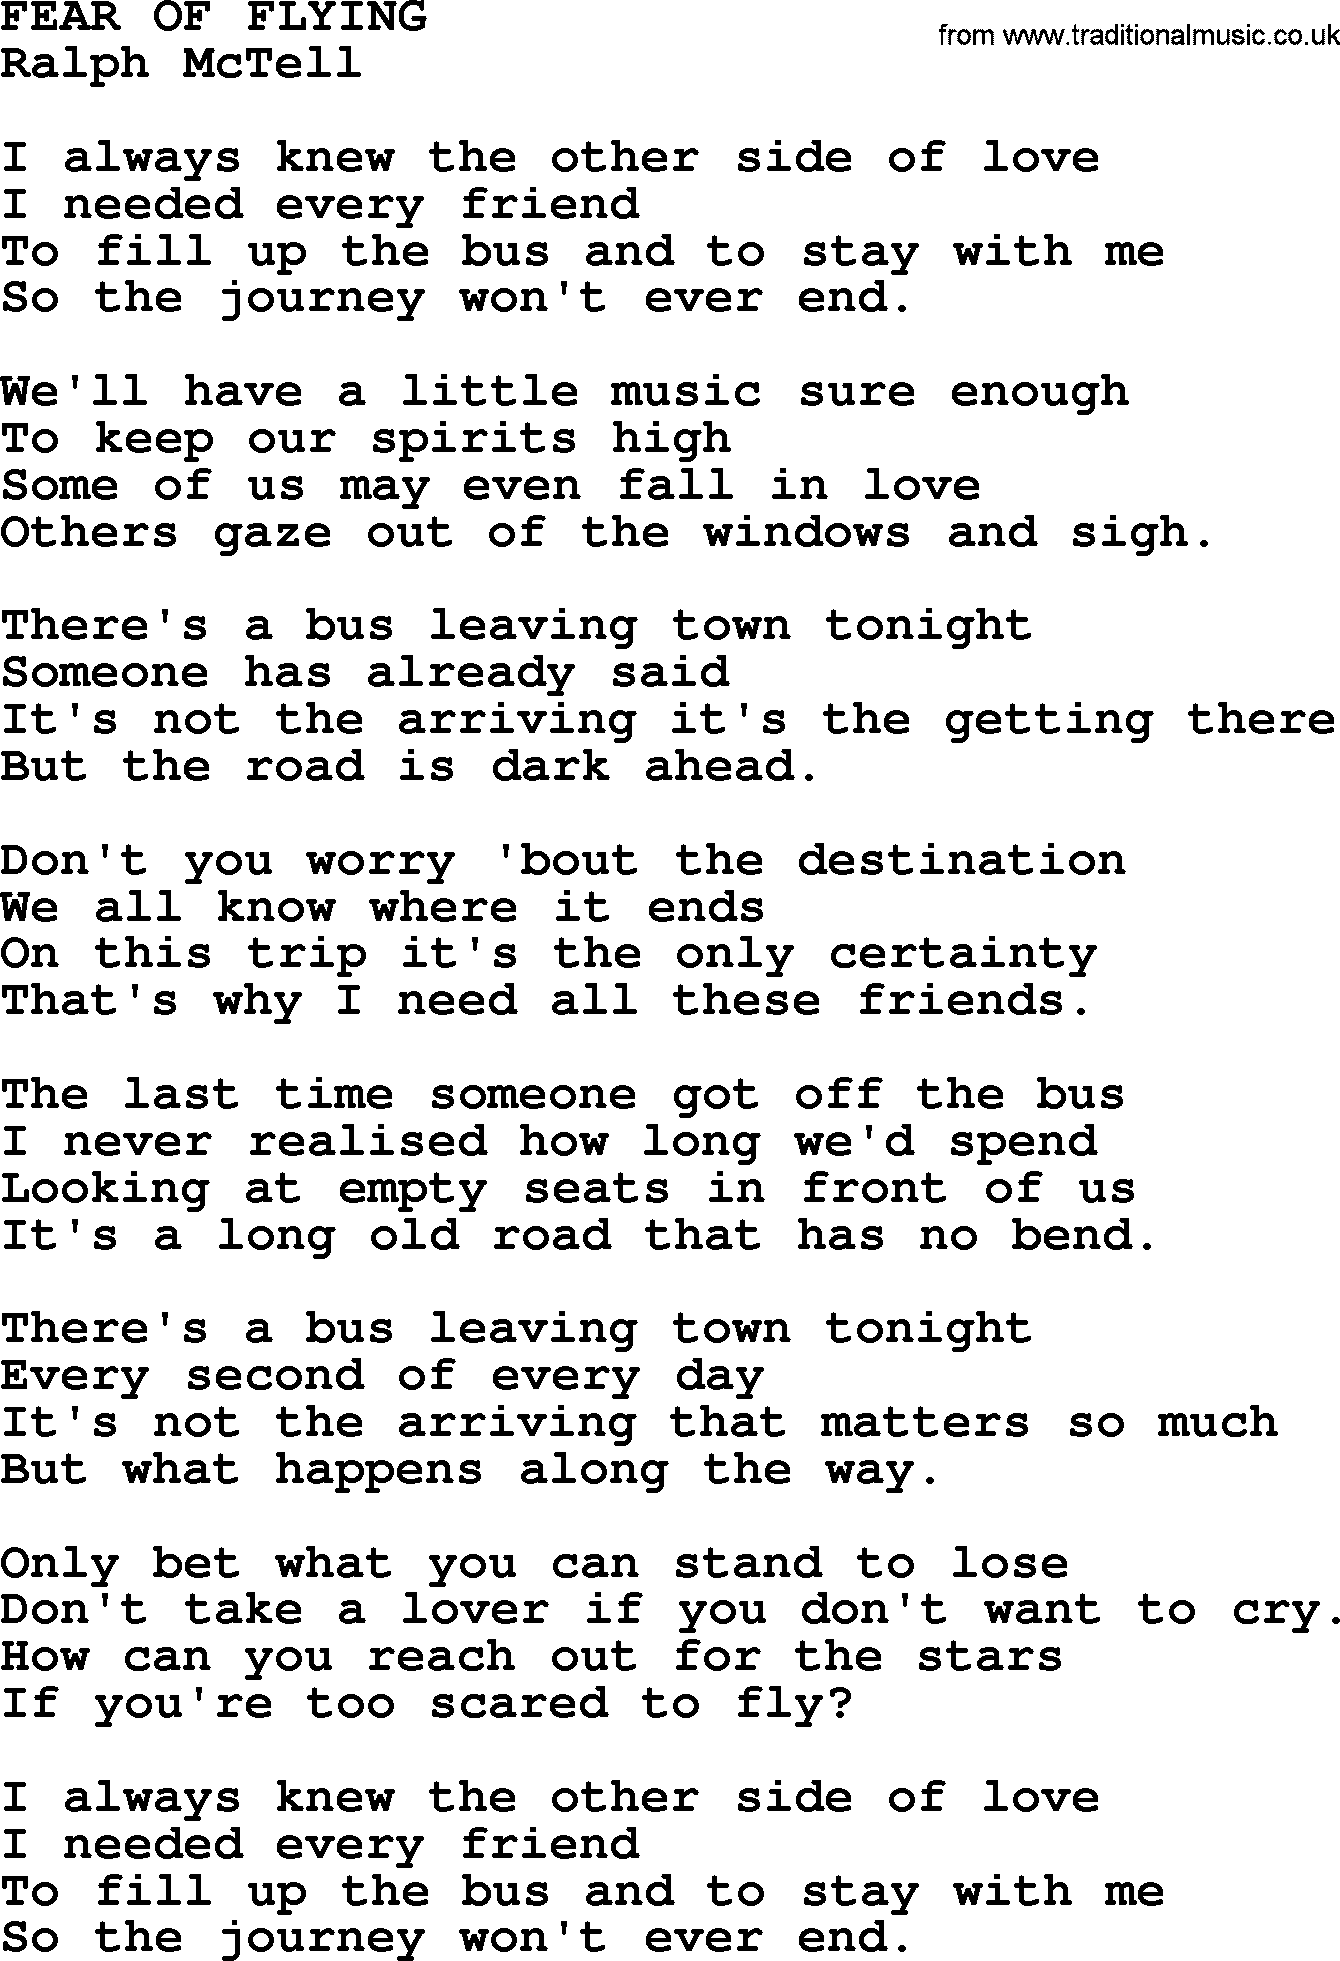 Ralph McTell Song: Fear Of Flying, lyrics